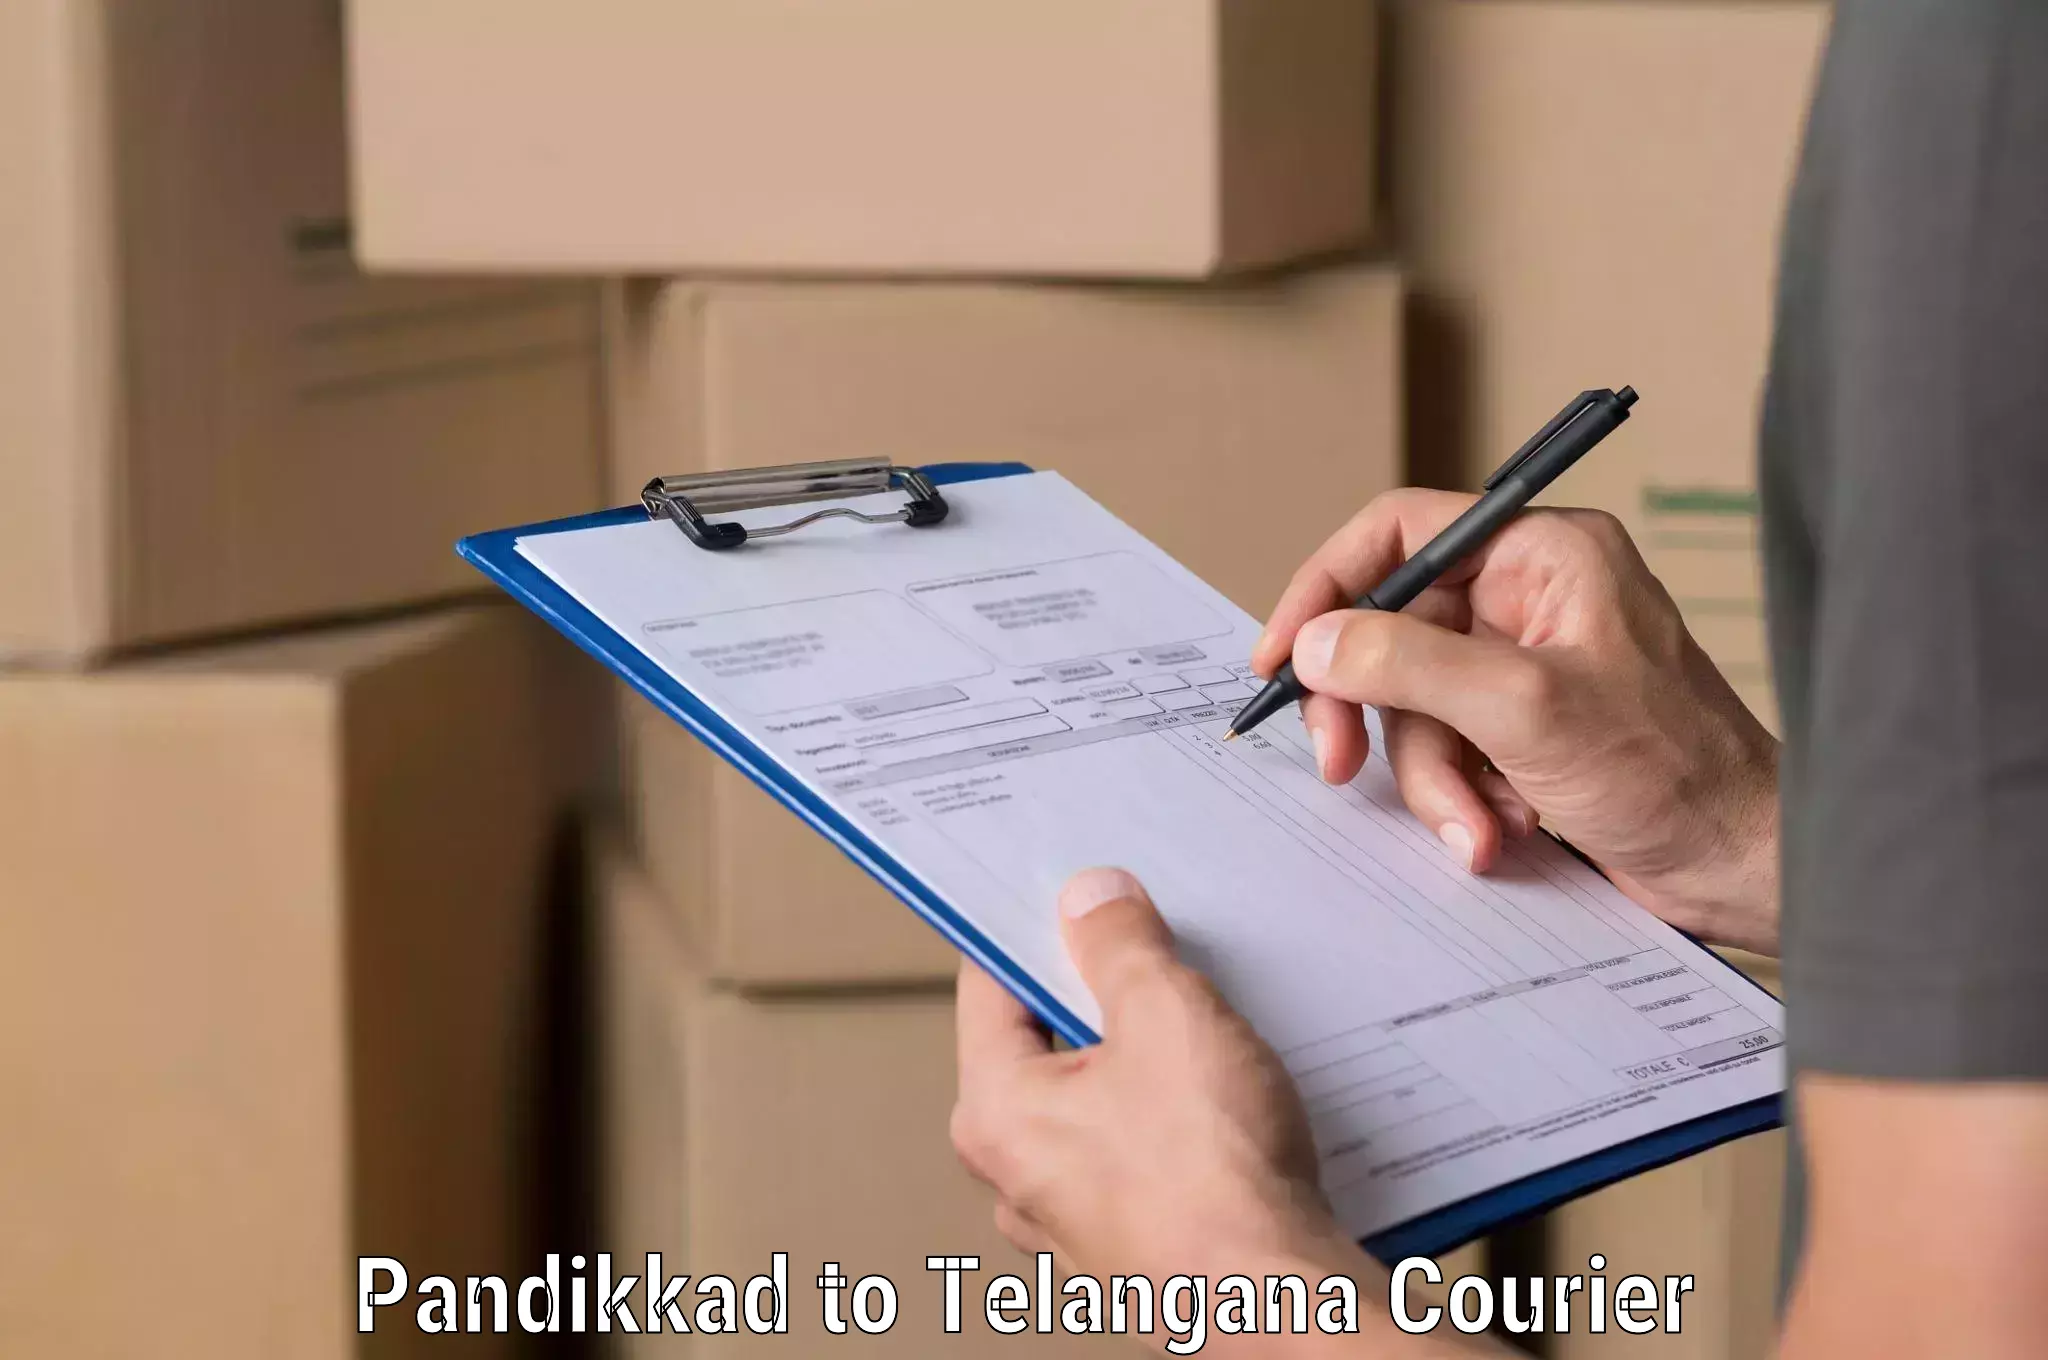 Parcel handling and care Pandikkad to Telangana